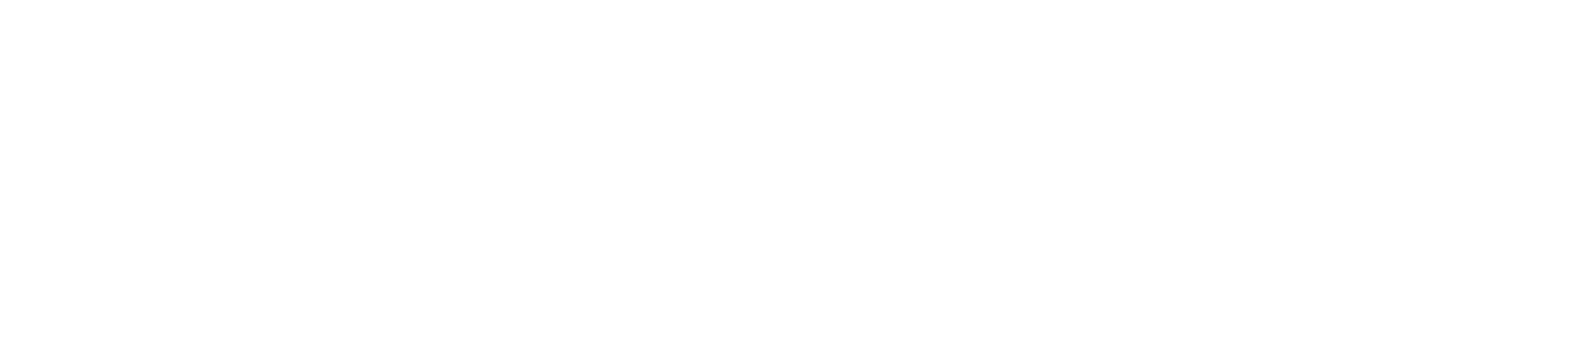 Anglo American logo grand pour les fonds sombres (PNG transparent)